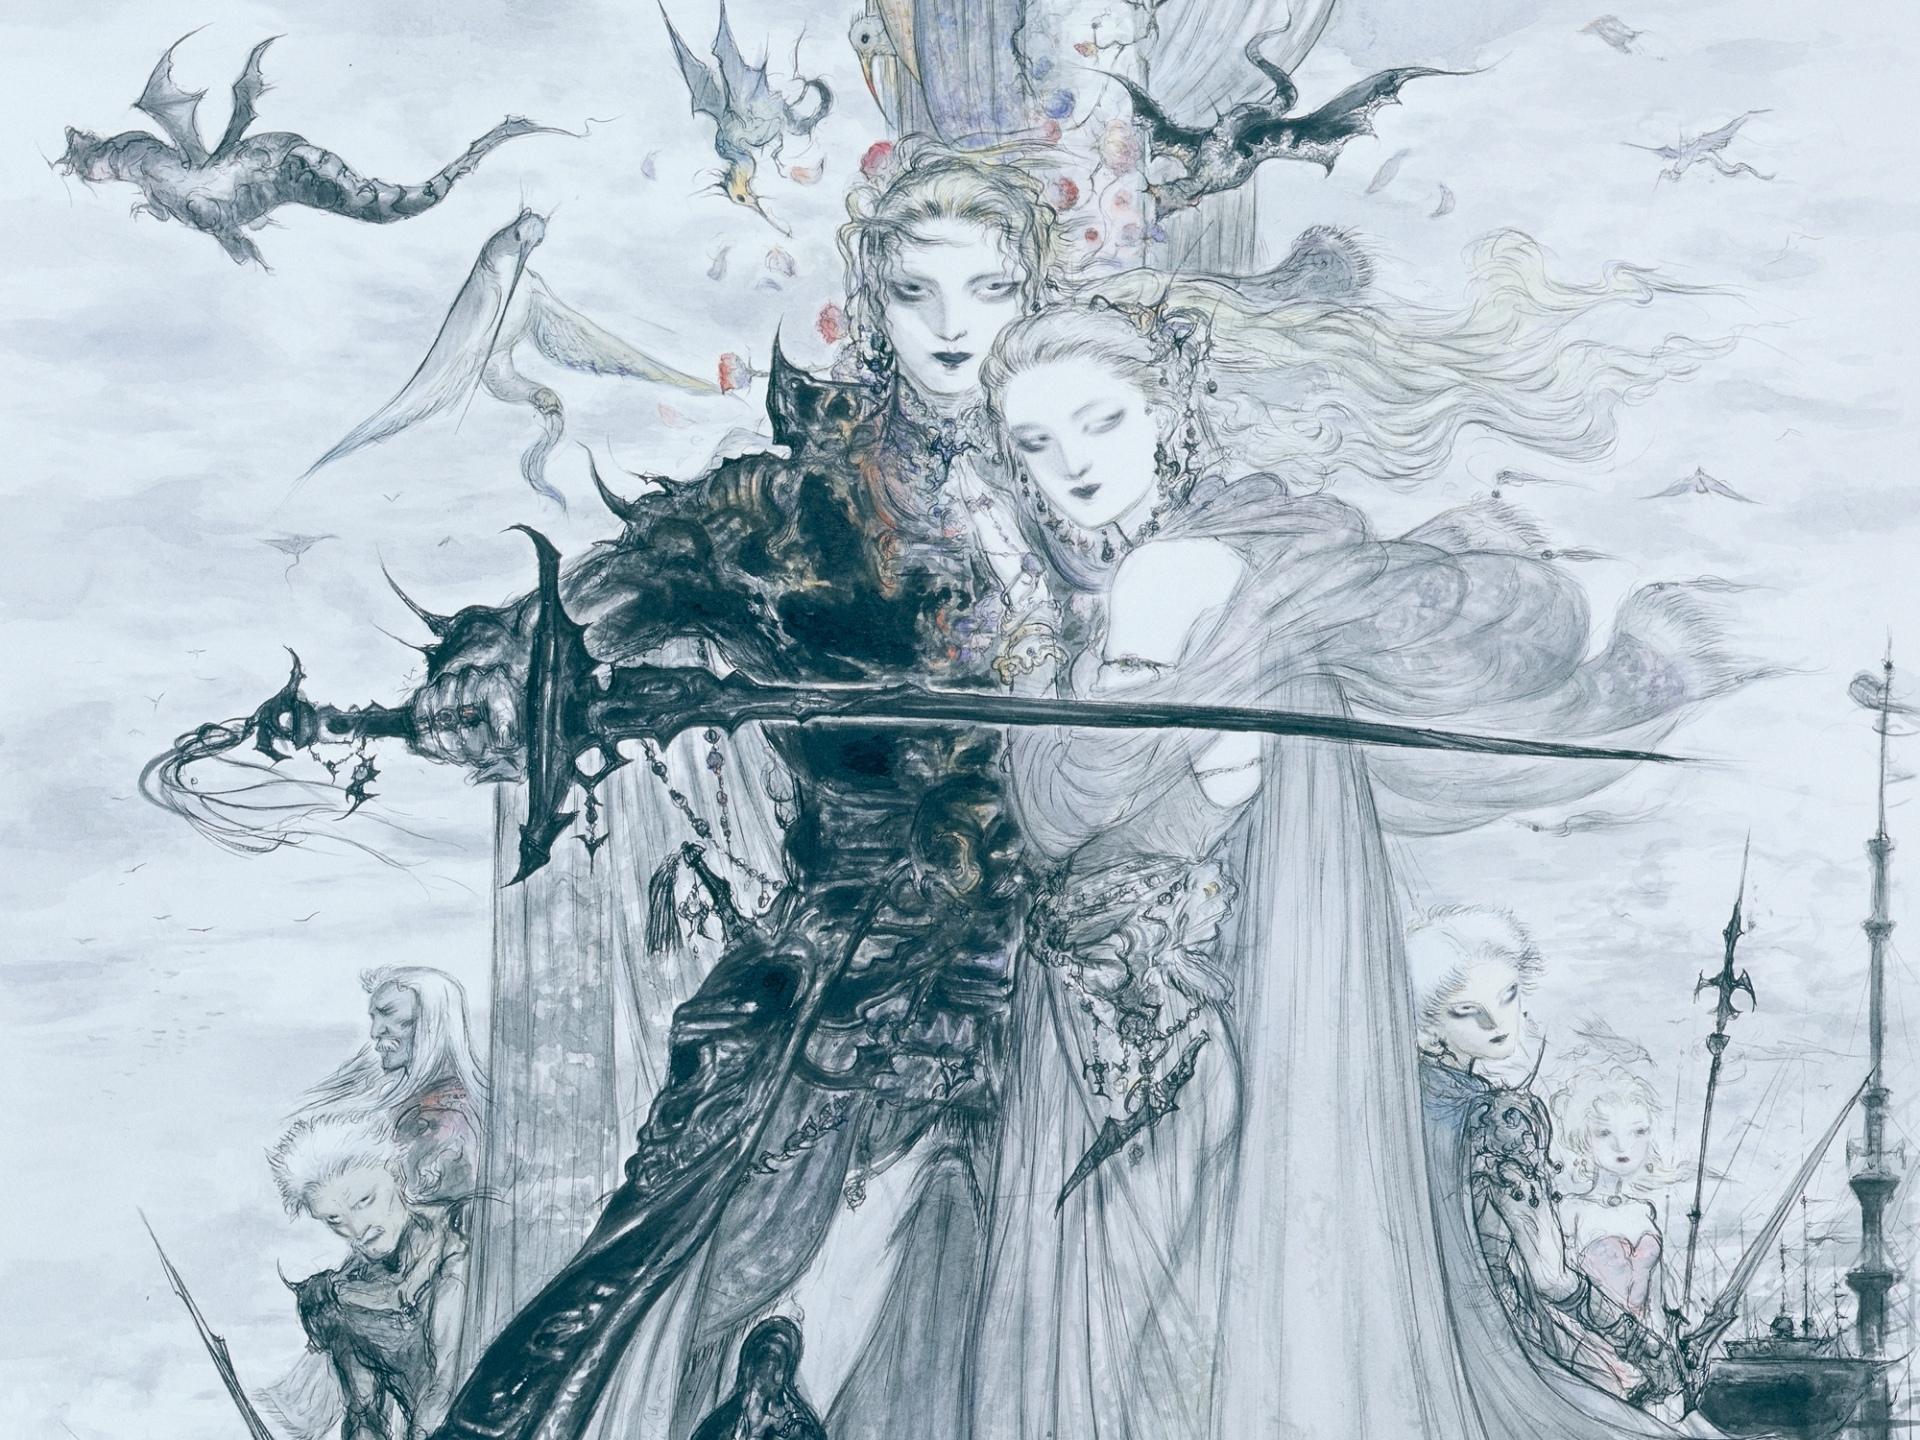 Final Fantasy V at 1024 x 1024 iPad size wallpapers HD quality